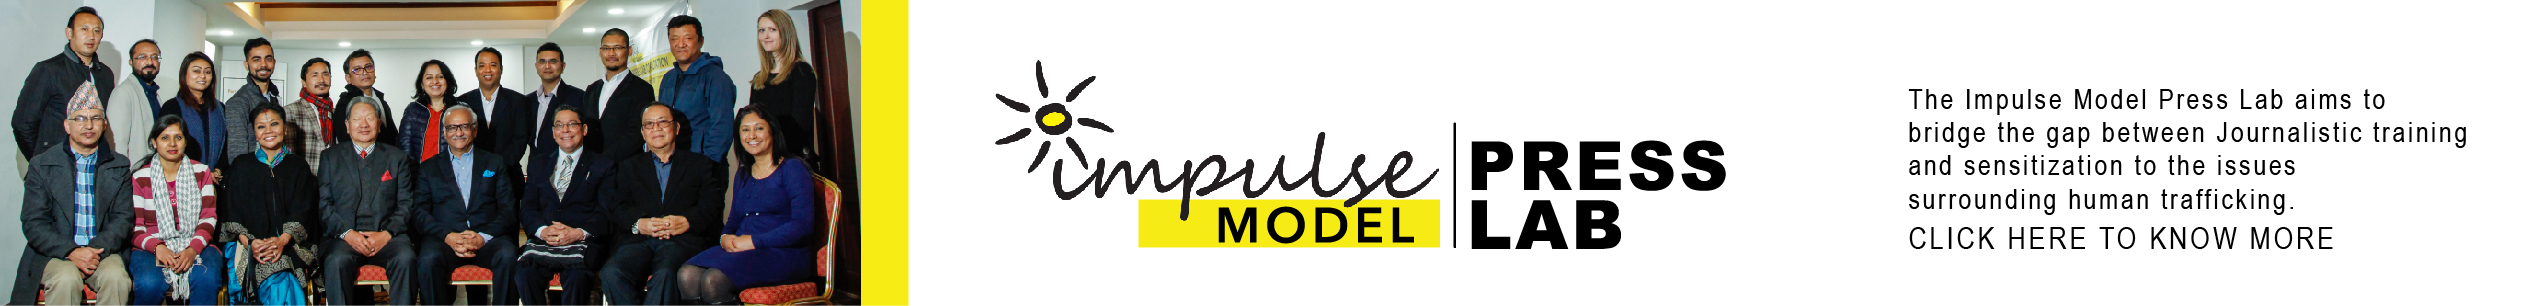 About Impulse Model Press Lab